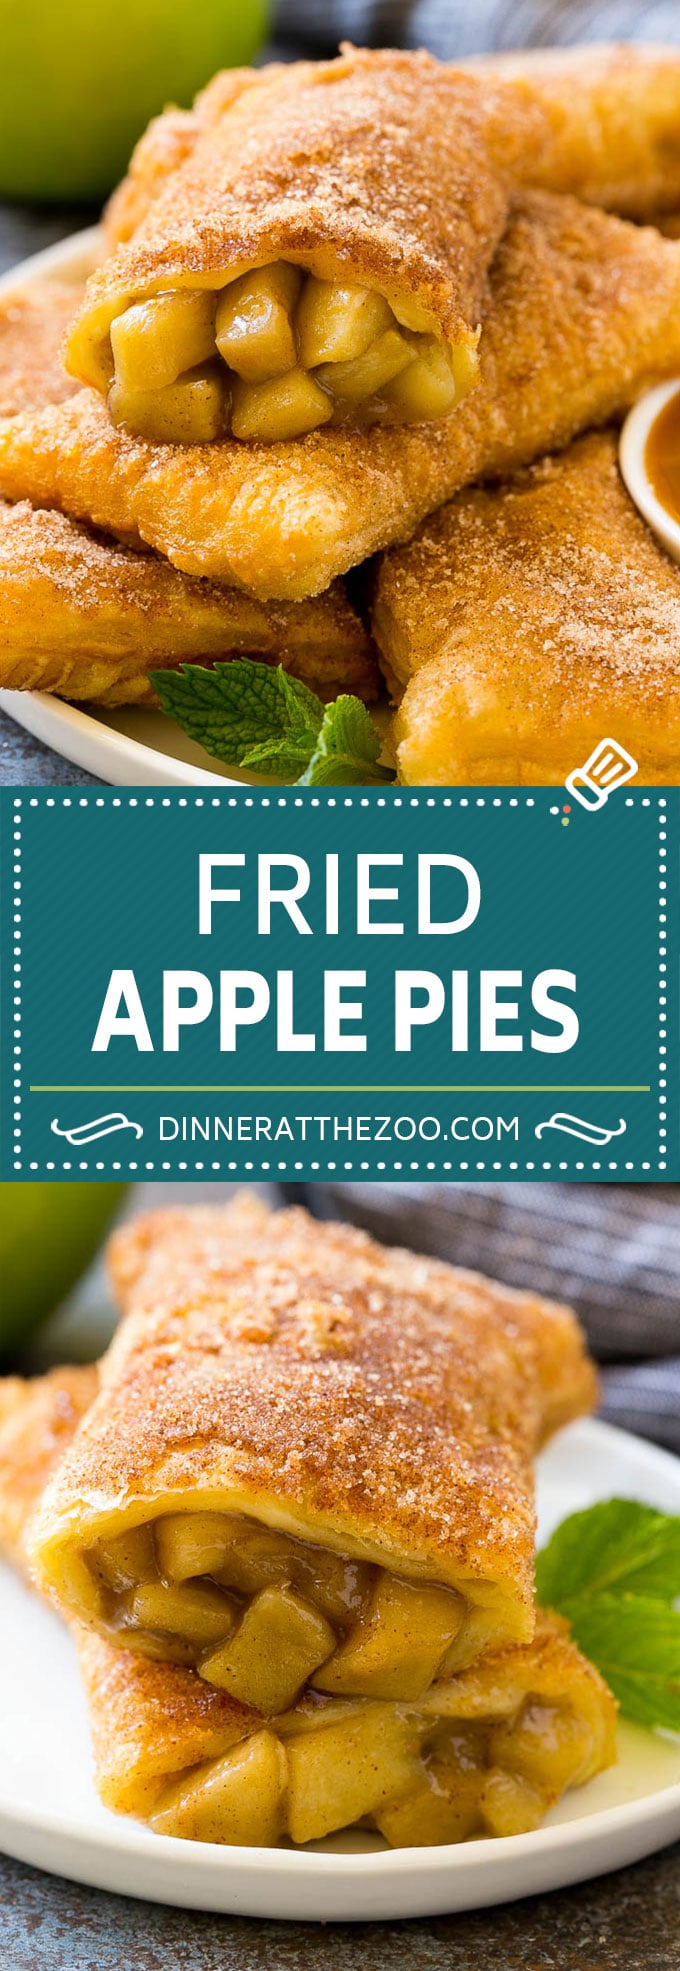 Fried Apple Pies Recipe | McDonald's Copycat Recipe | Apple Pie | Apple Hand Pies #pie #apples #applepie #dessert #snack #dinneratthezoo